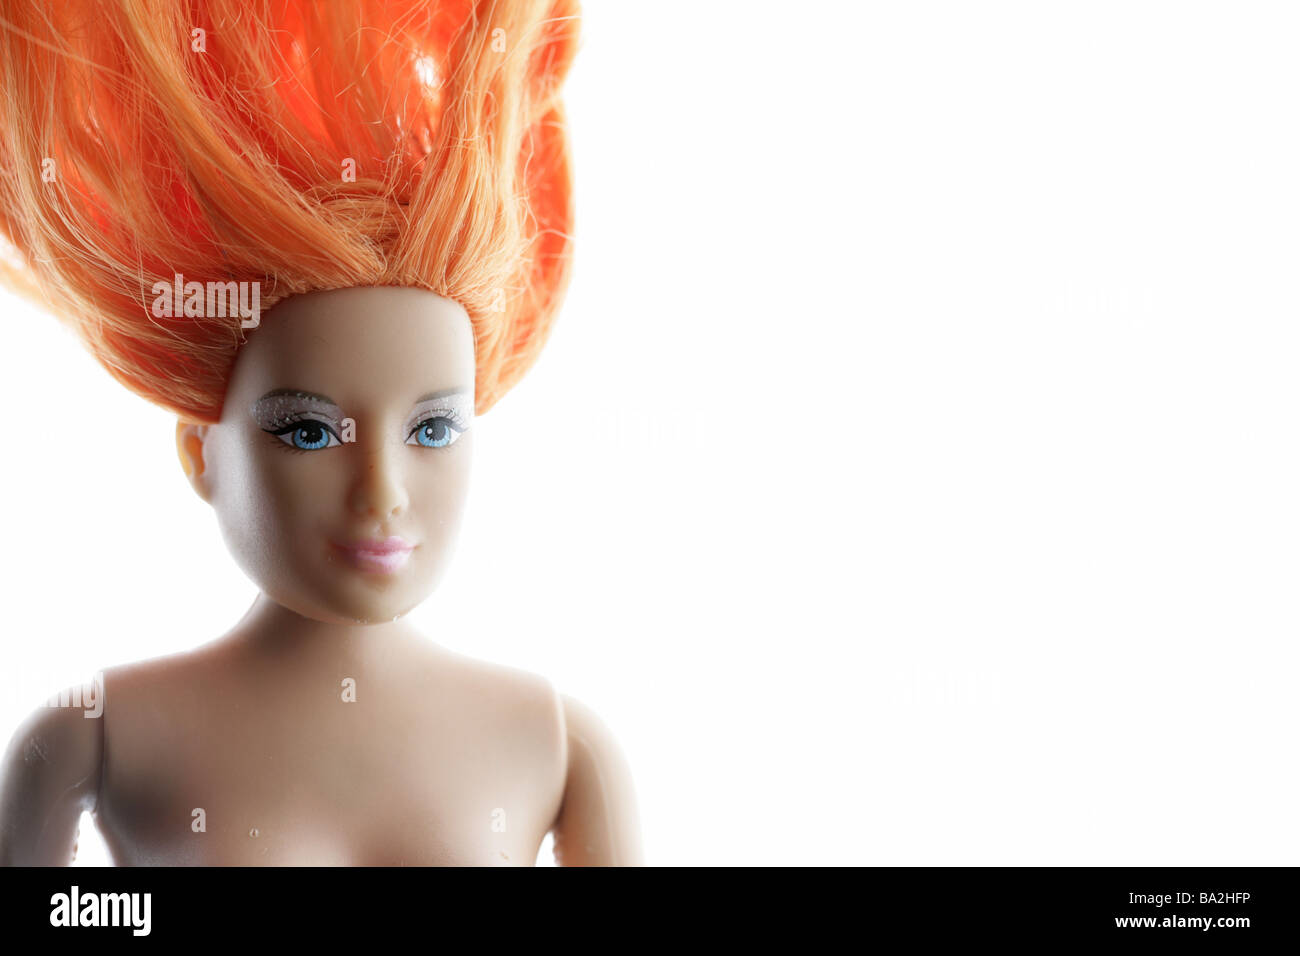 Barbie-Puppe rot-behaarte Porträt thematisiert keine Eigenschaft Version  Serie Spielzeug Spielzeugpuppe Barbie Frau Spielzeugfigur Barbie-Puppe  langhaarig Stockfotografie - Alamy